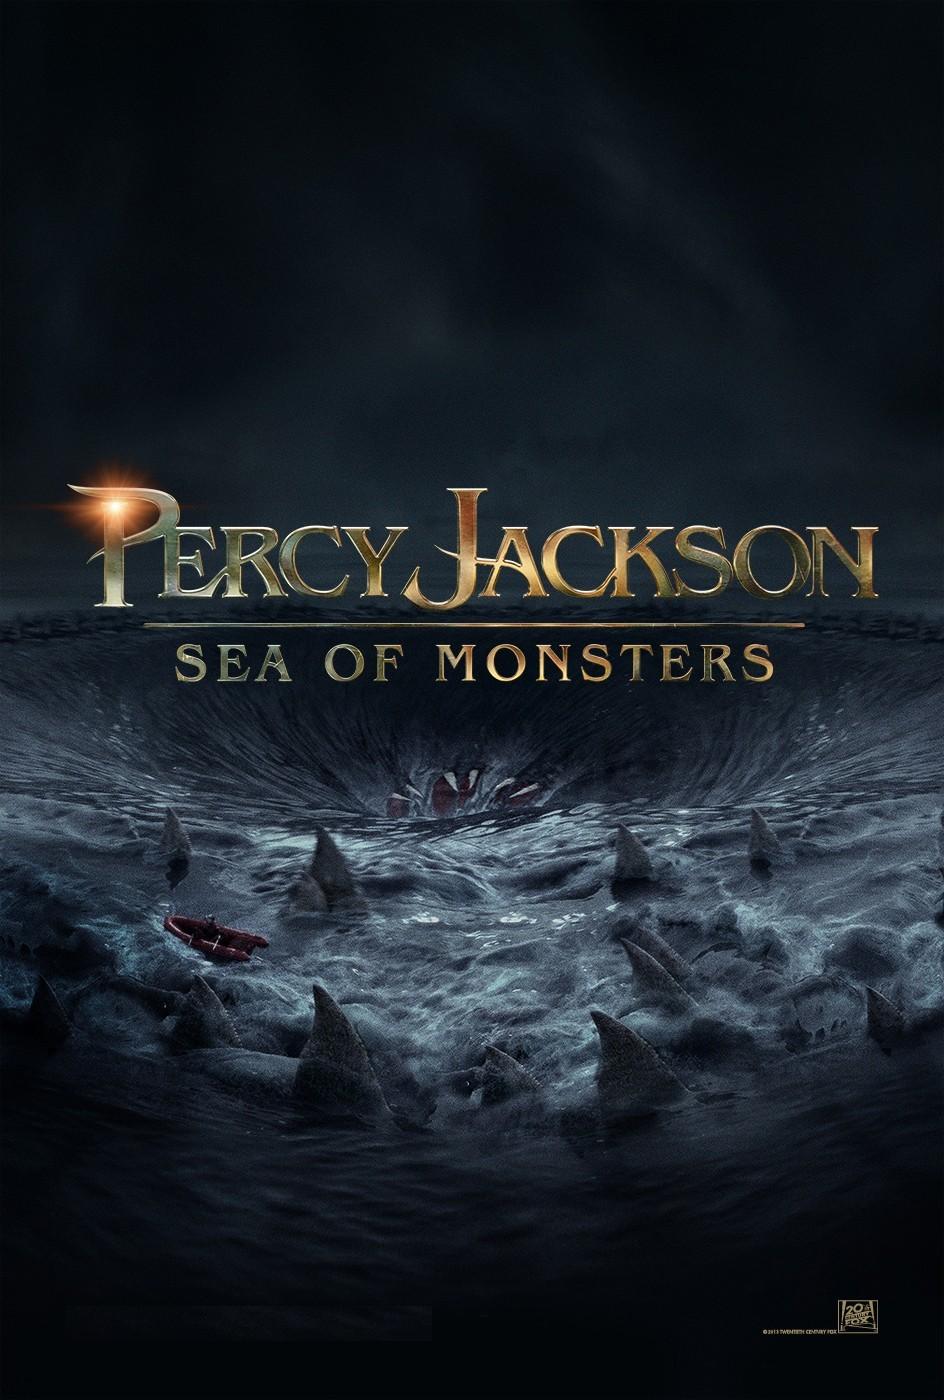 PERCY-JACKSON-SEA-OF-MONSTERS-Poster (1).jpg